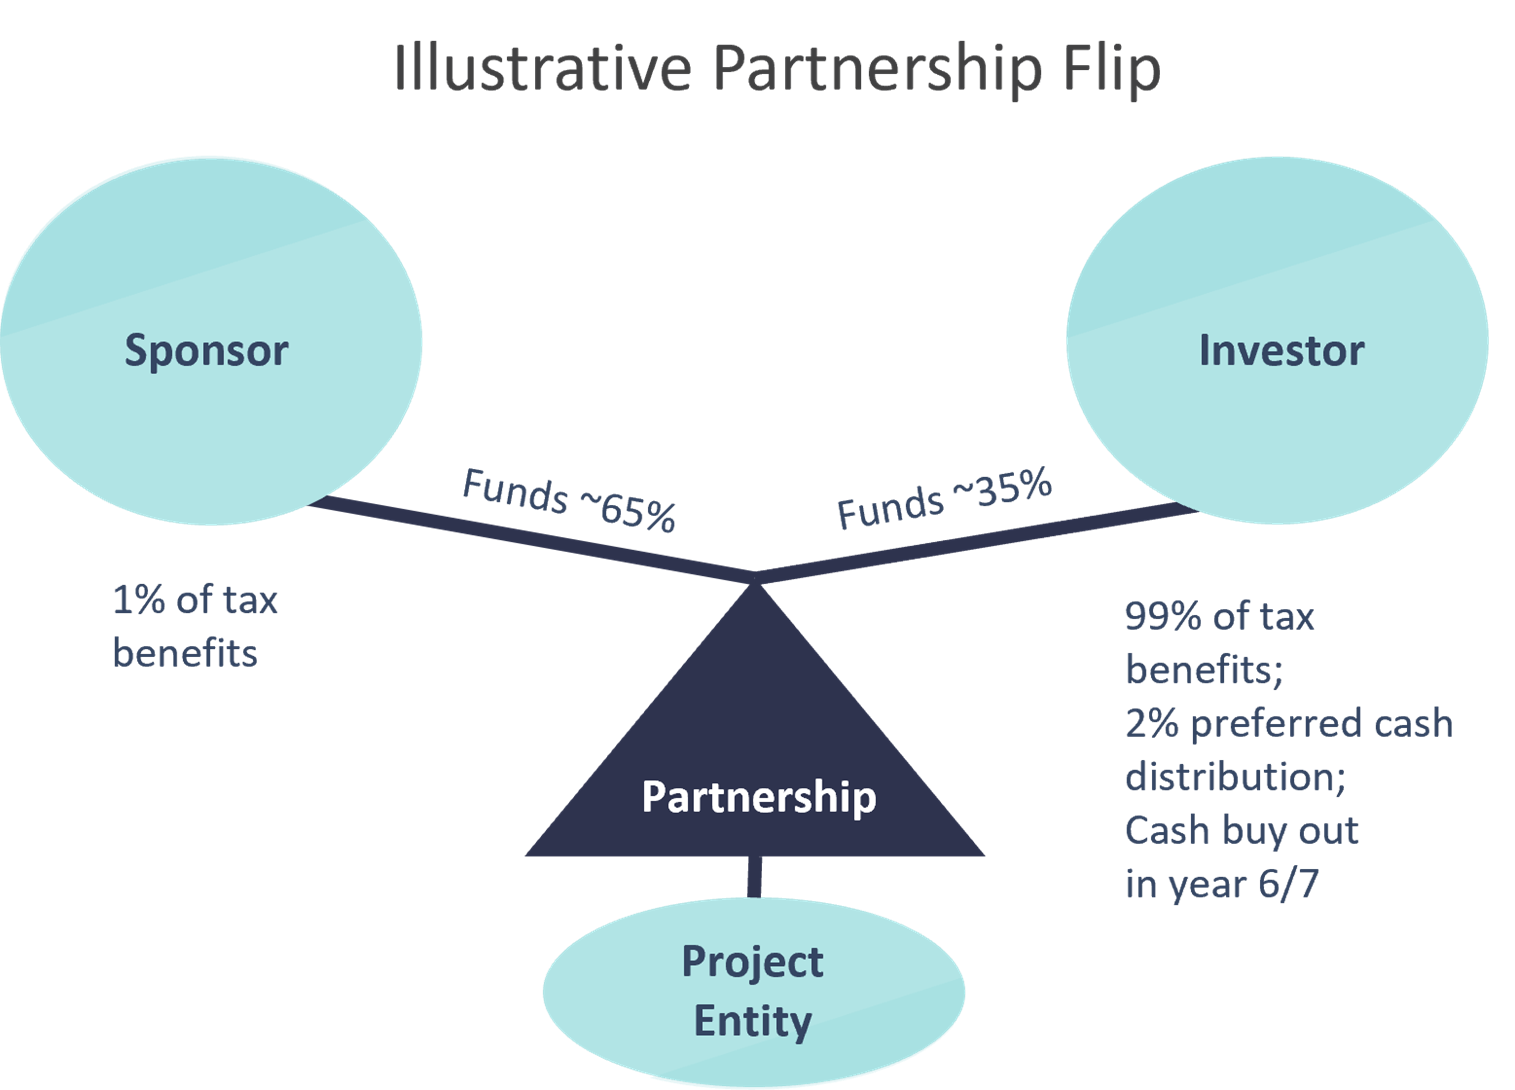 Illustrative Partnership Flip